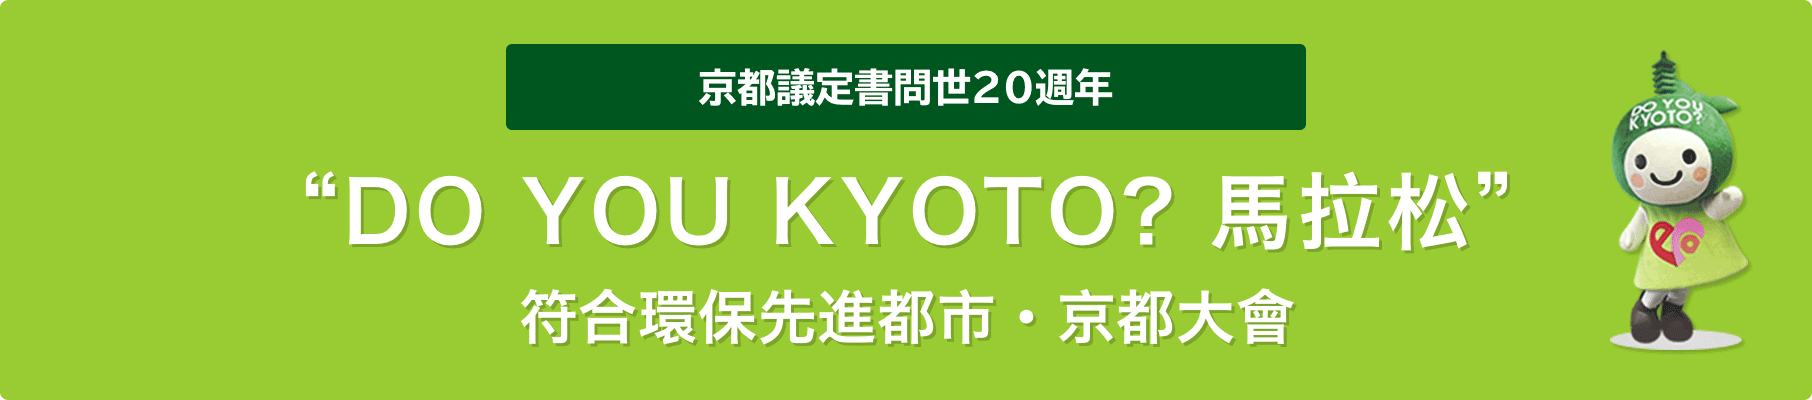 「DO YOU KYOTO？馬拉松」符合環保先進都市・京都大會